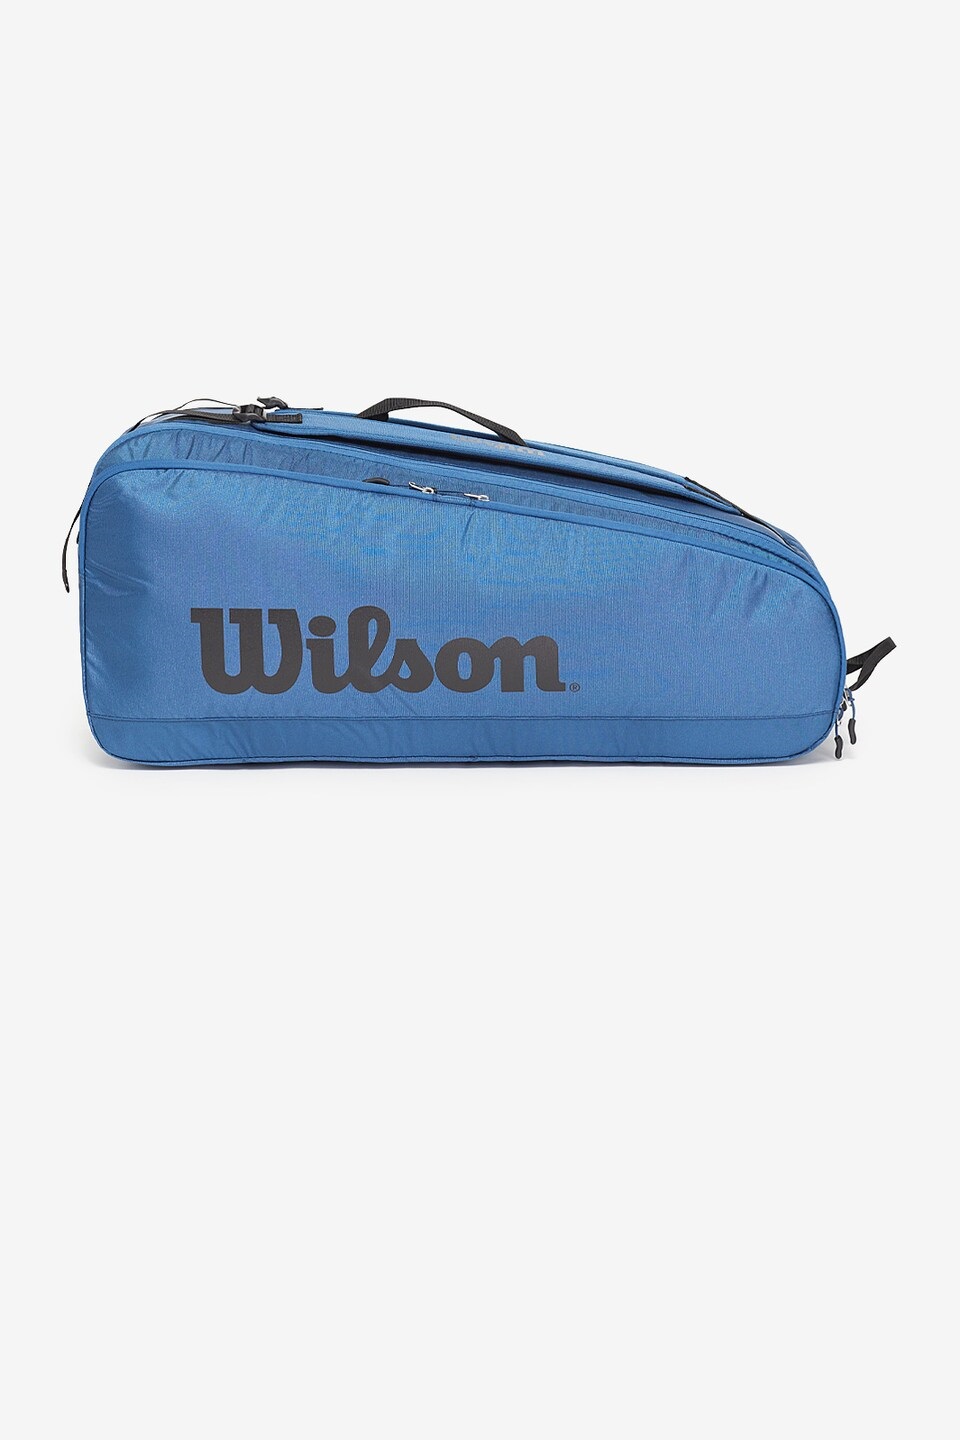 WİLSON - Tour Ultra Raket Çantası 12'li - Mavi